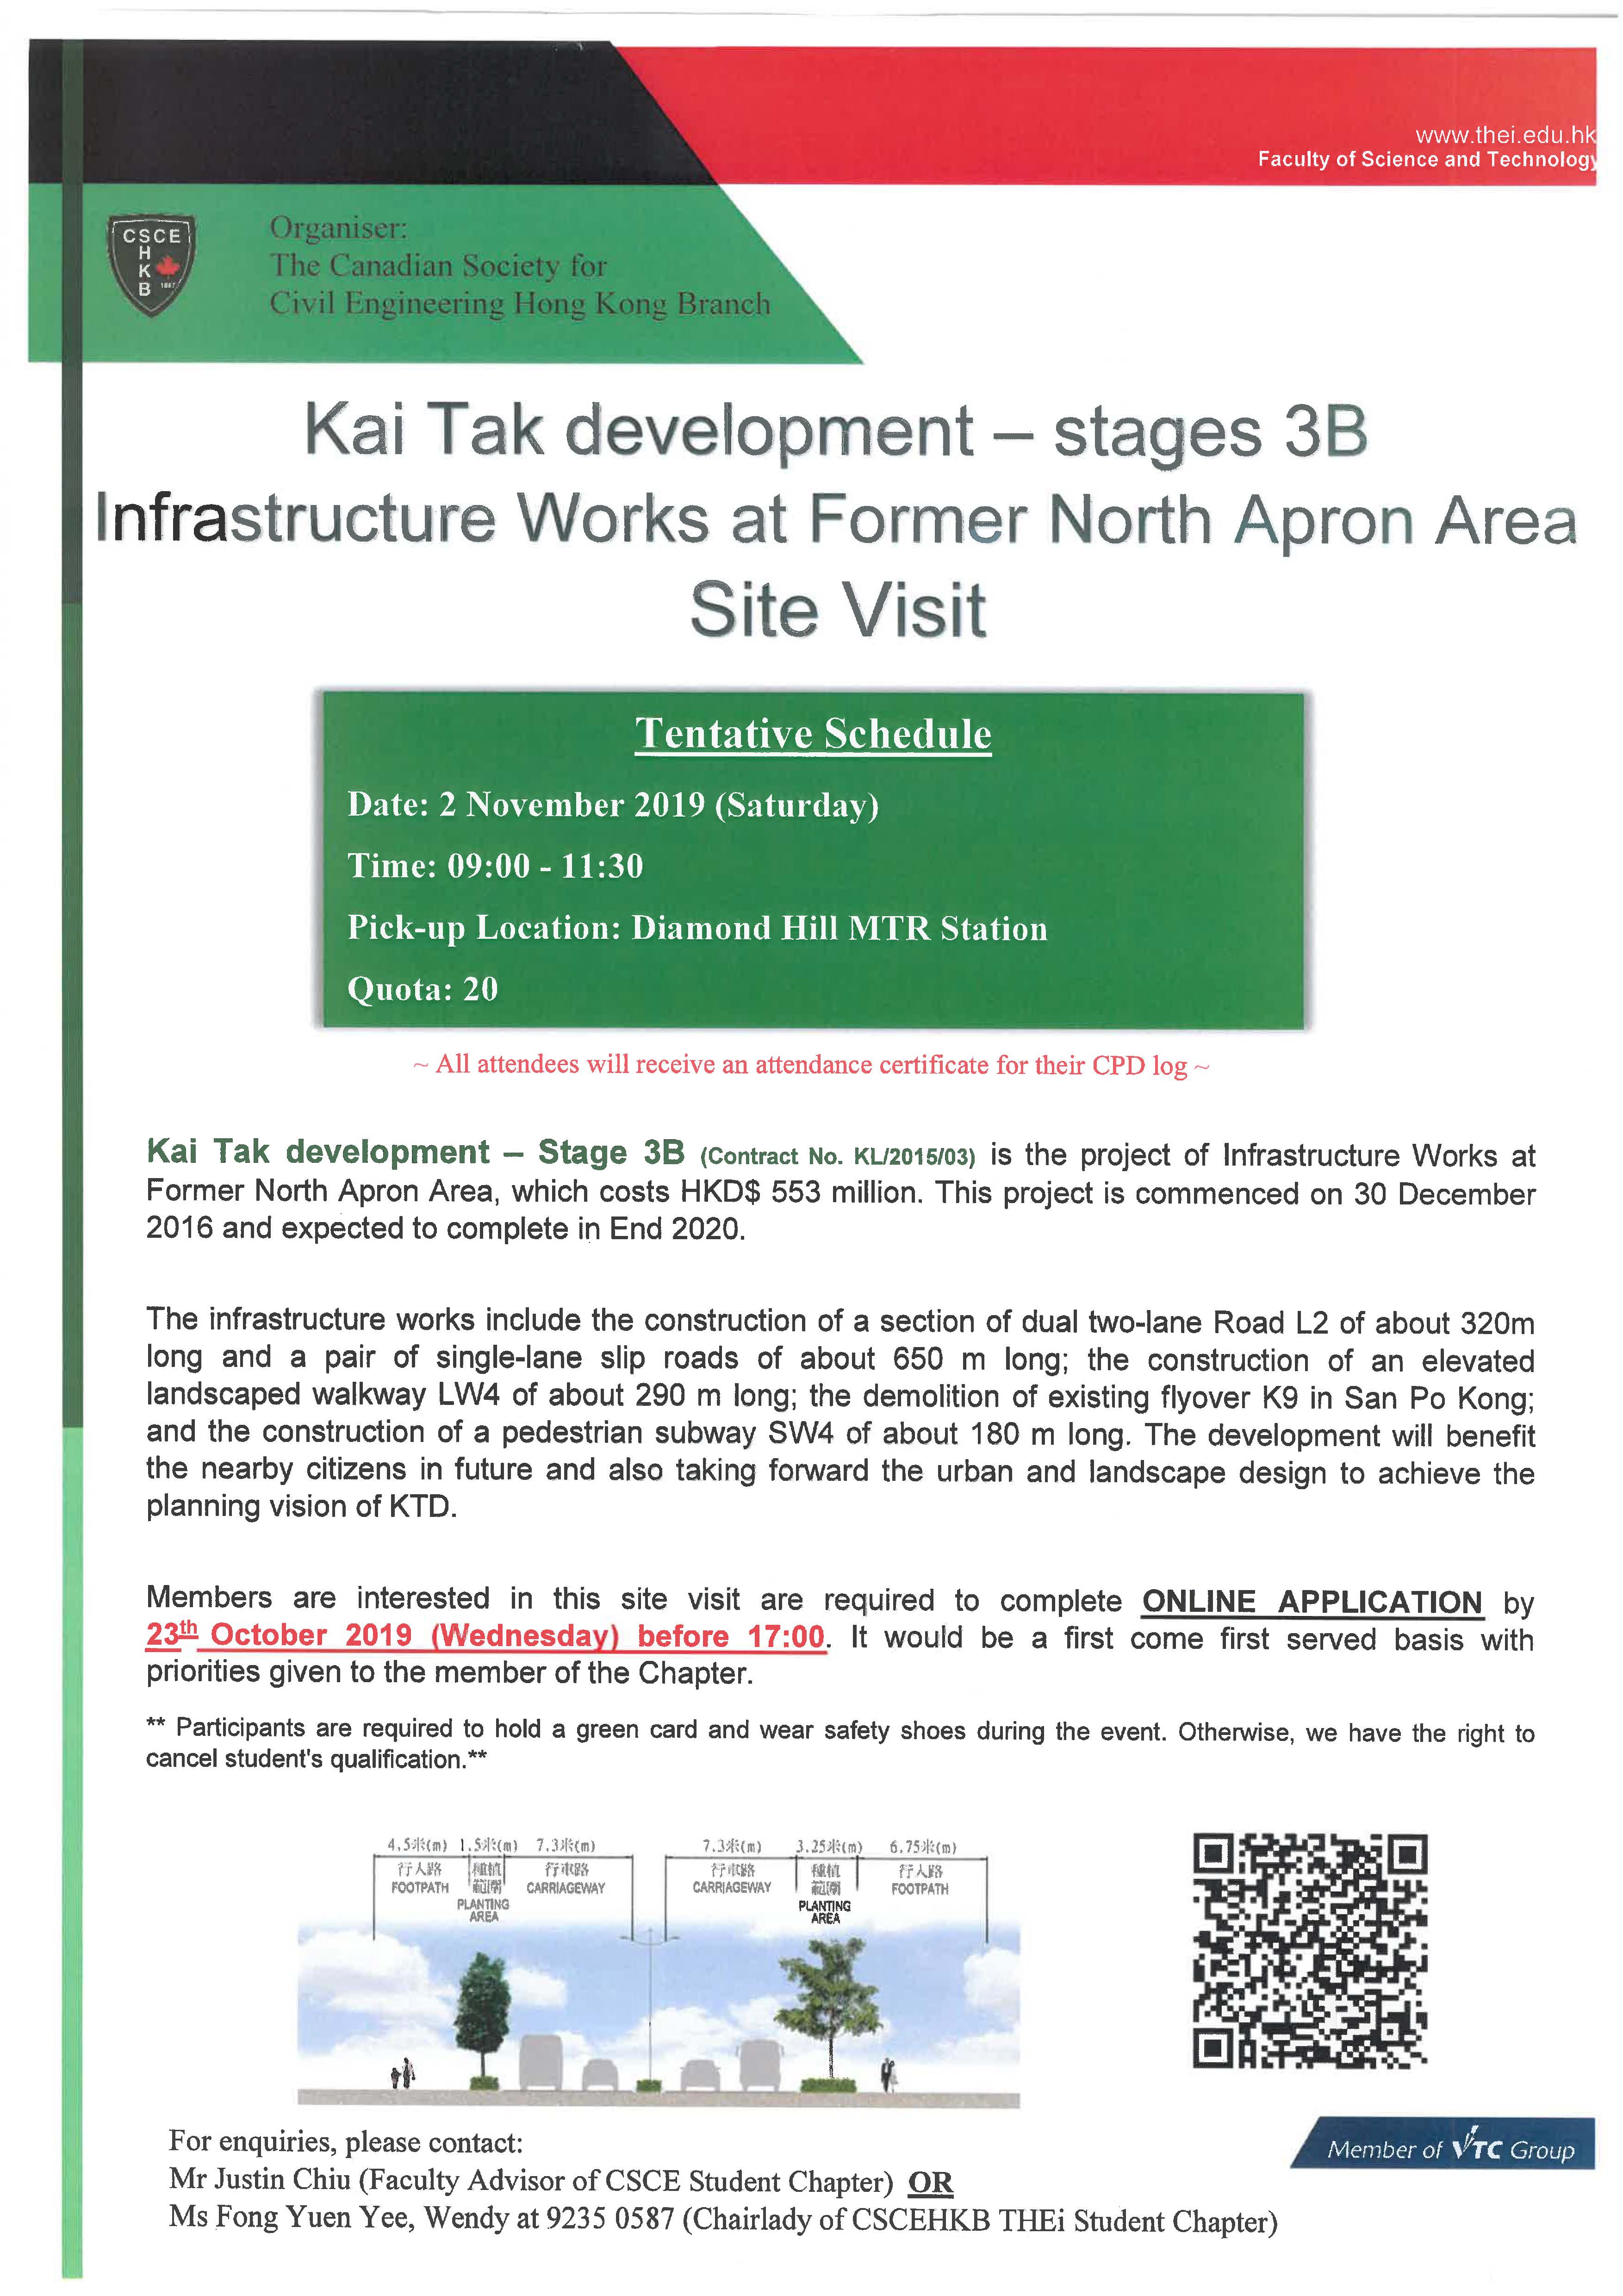 Kai Tak Development - stage 3B_Infrastructure Works Former North Apron Area Site Visit